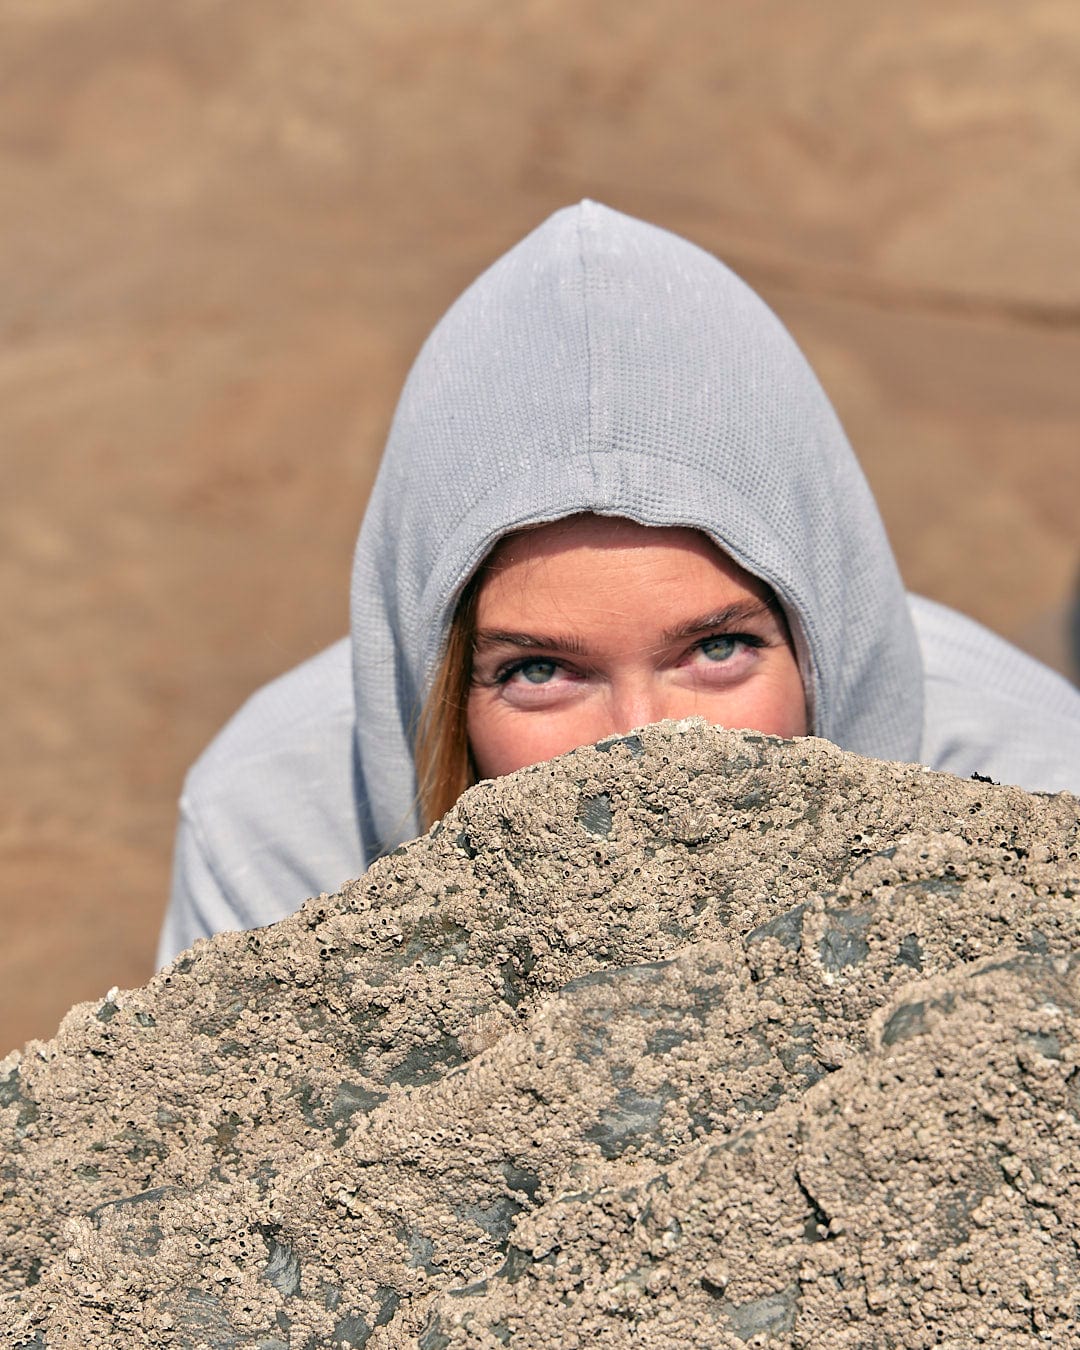 A girl in a Rosalin - Womens Zip Hoodie - Light Grey, made by Saltrock, peeking out of a rock.